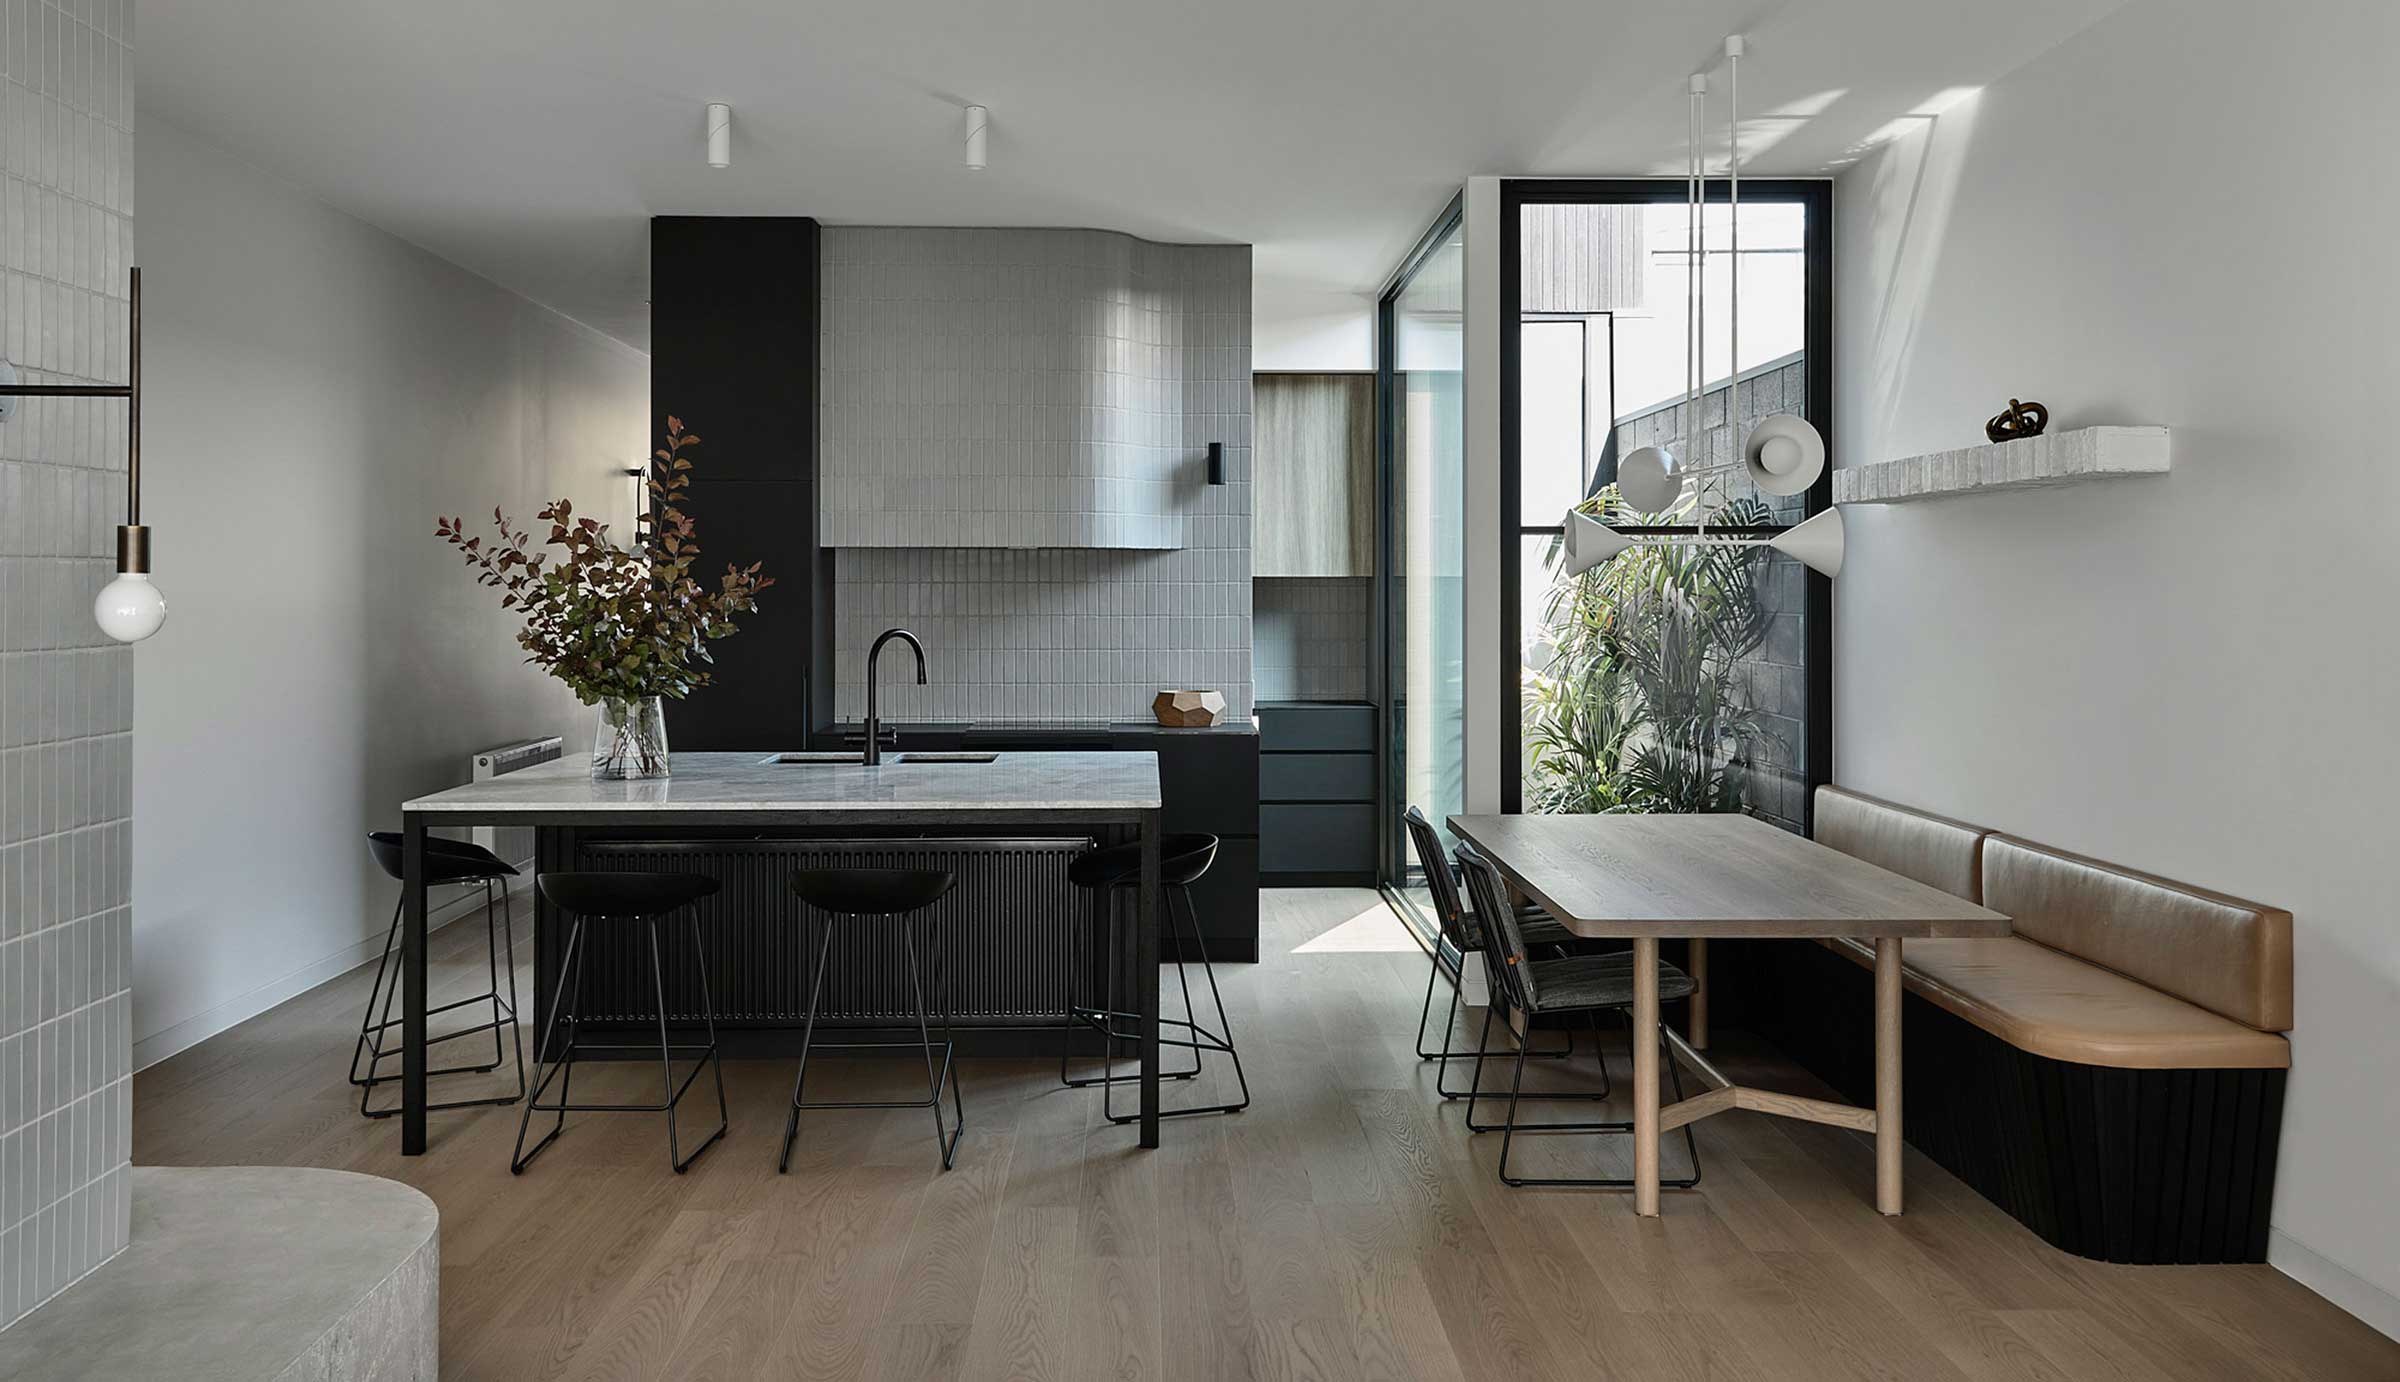 Modern kitchen with designer light fittings